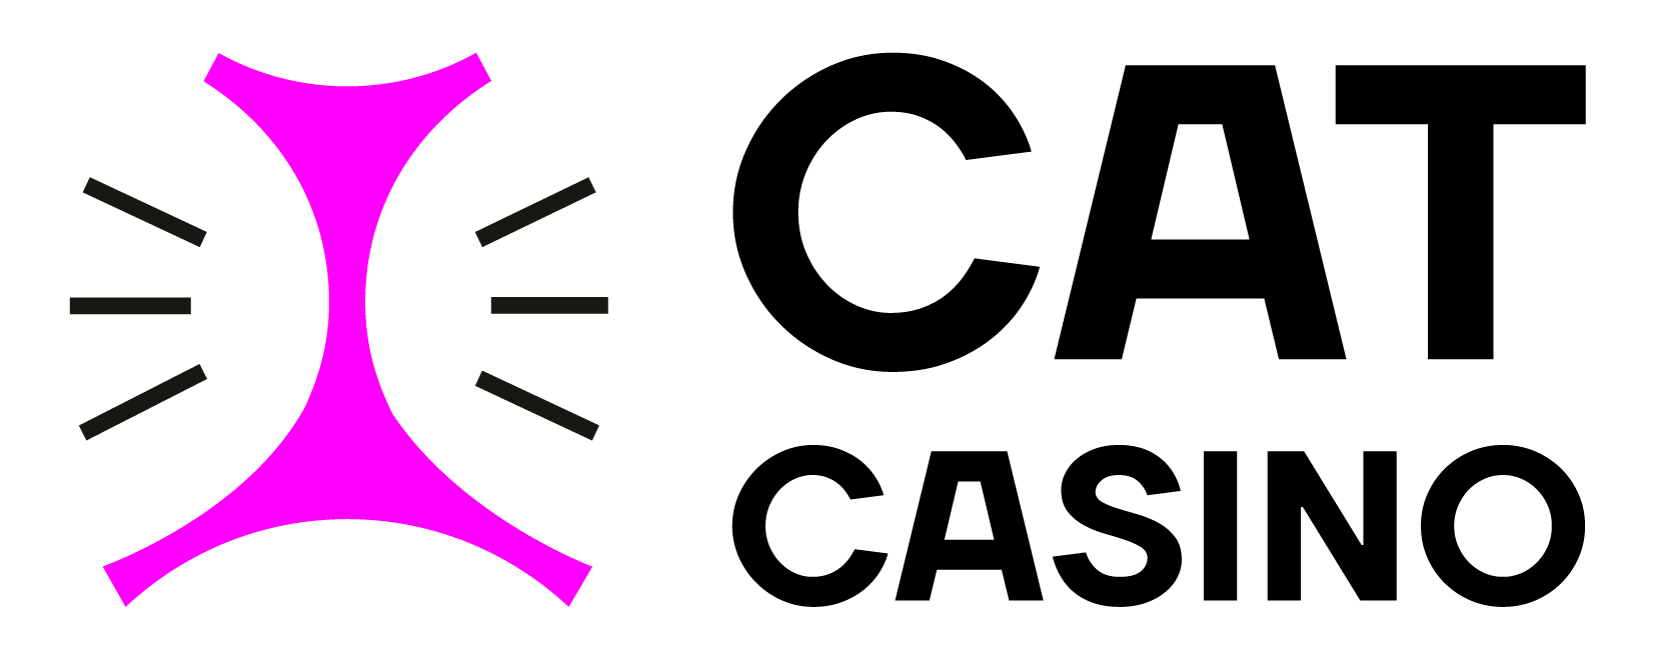 CatCasino offers